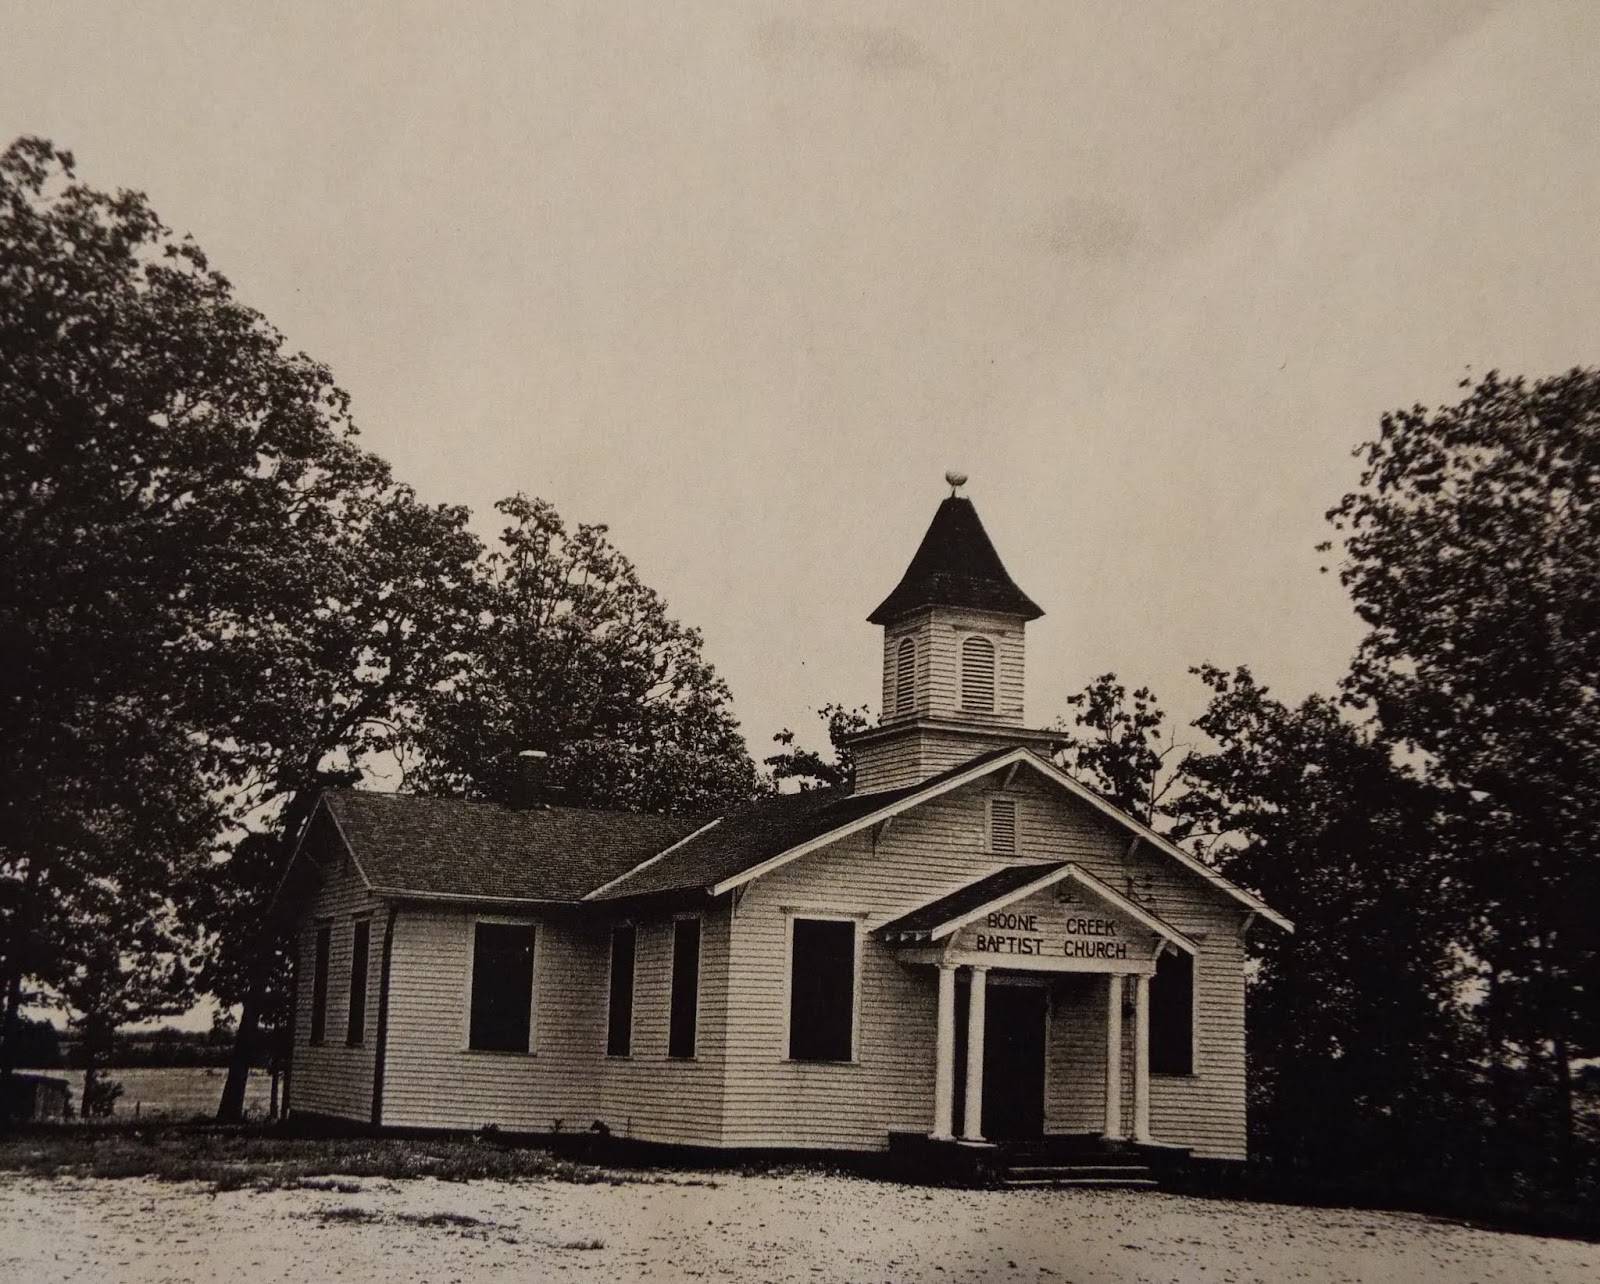 165 Anniversary Celebration at Boone Creek Baptist Church